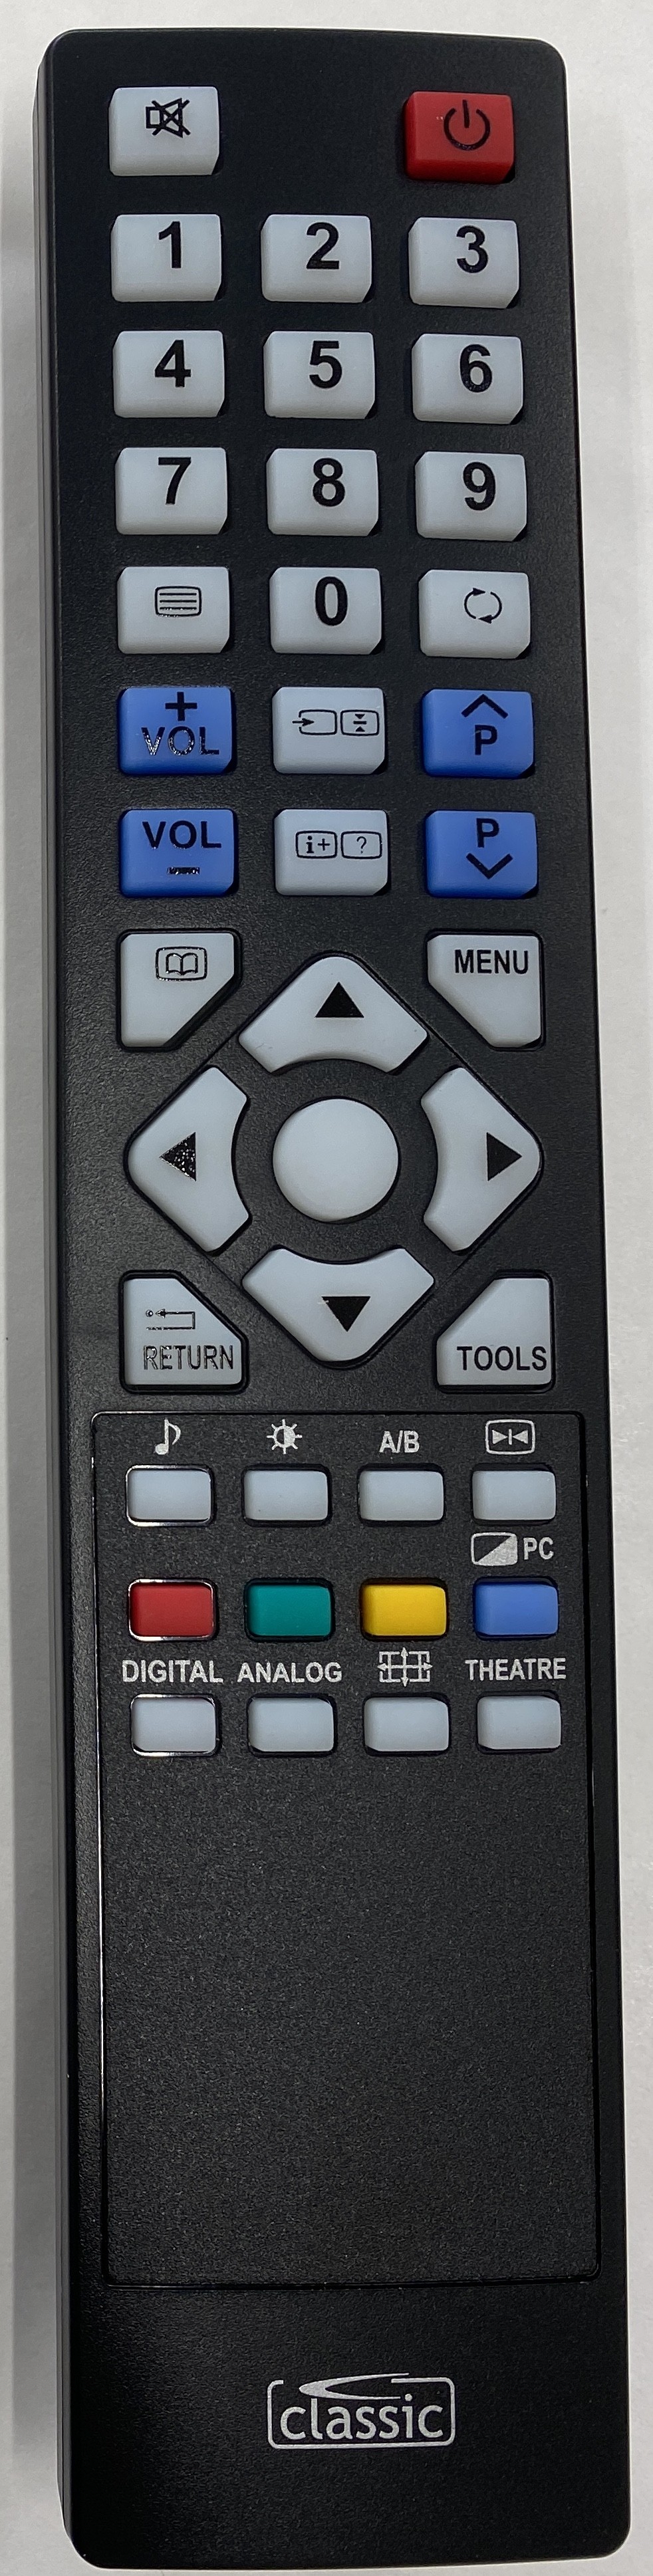 SONY RM-ED007 Remote Control Alternative